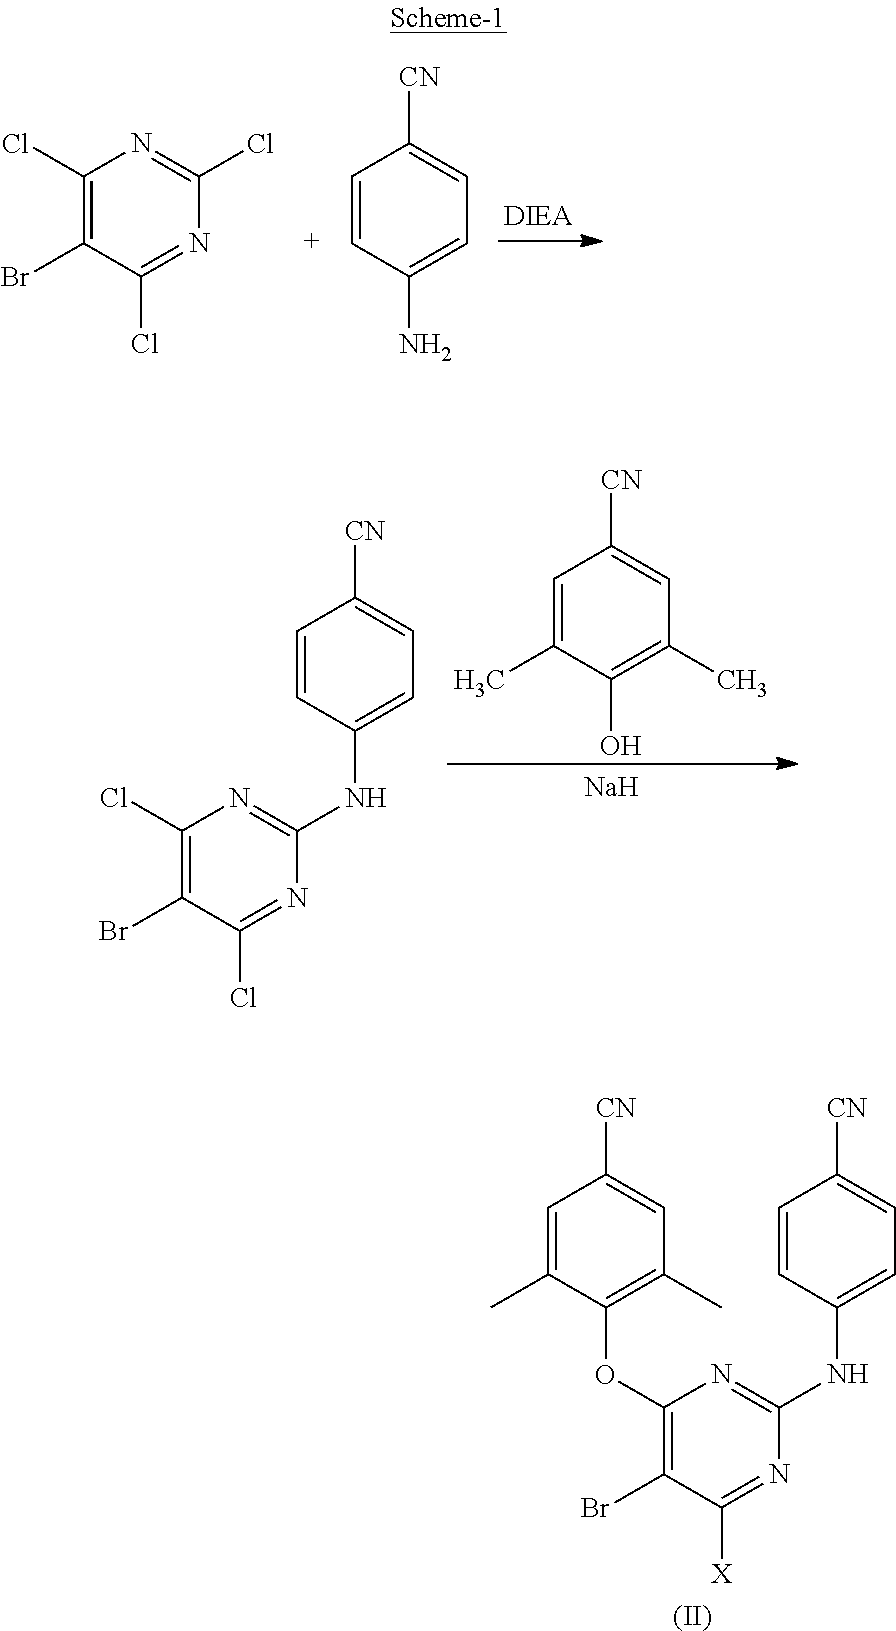 Process for synthesis of diarylpyrimidine non-nucleoside reverse transcriptase inhibitor